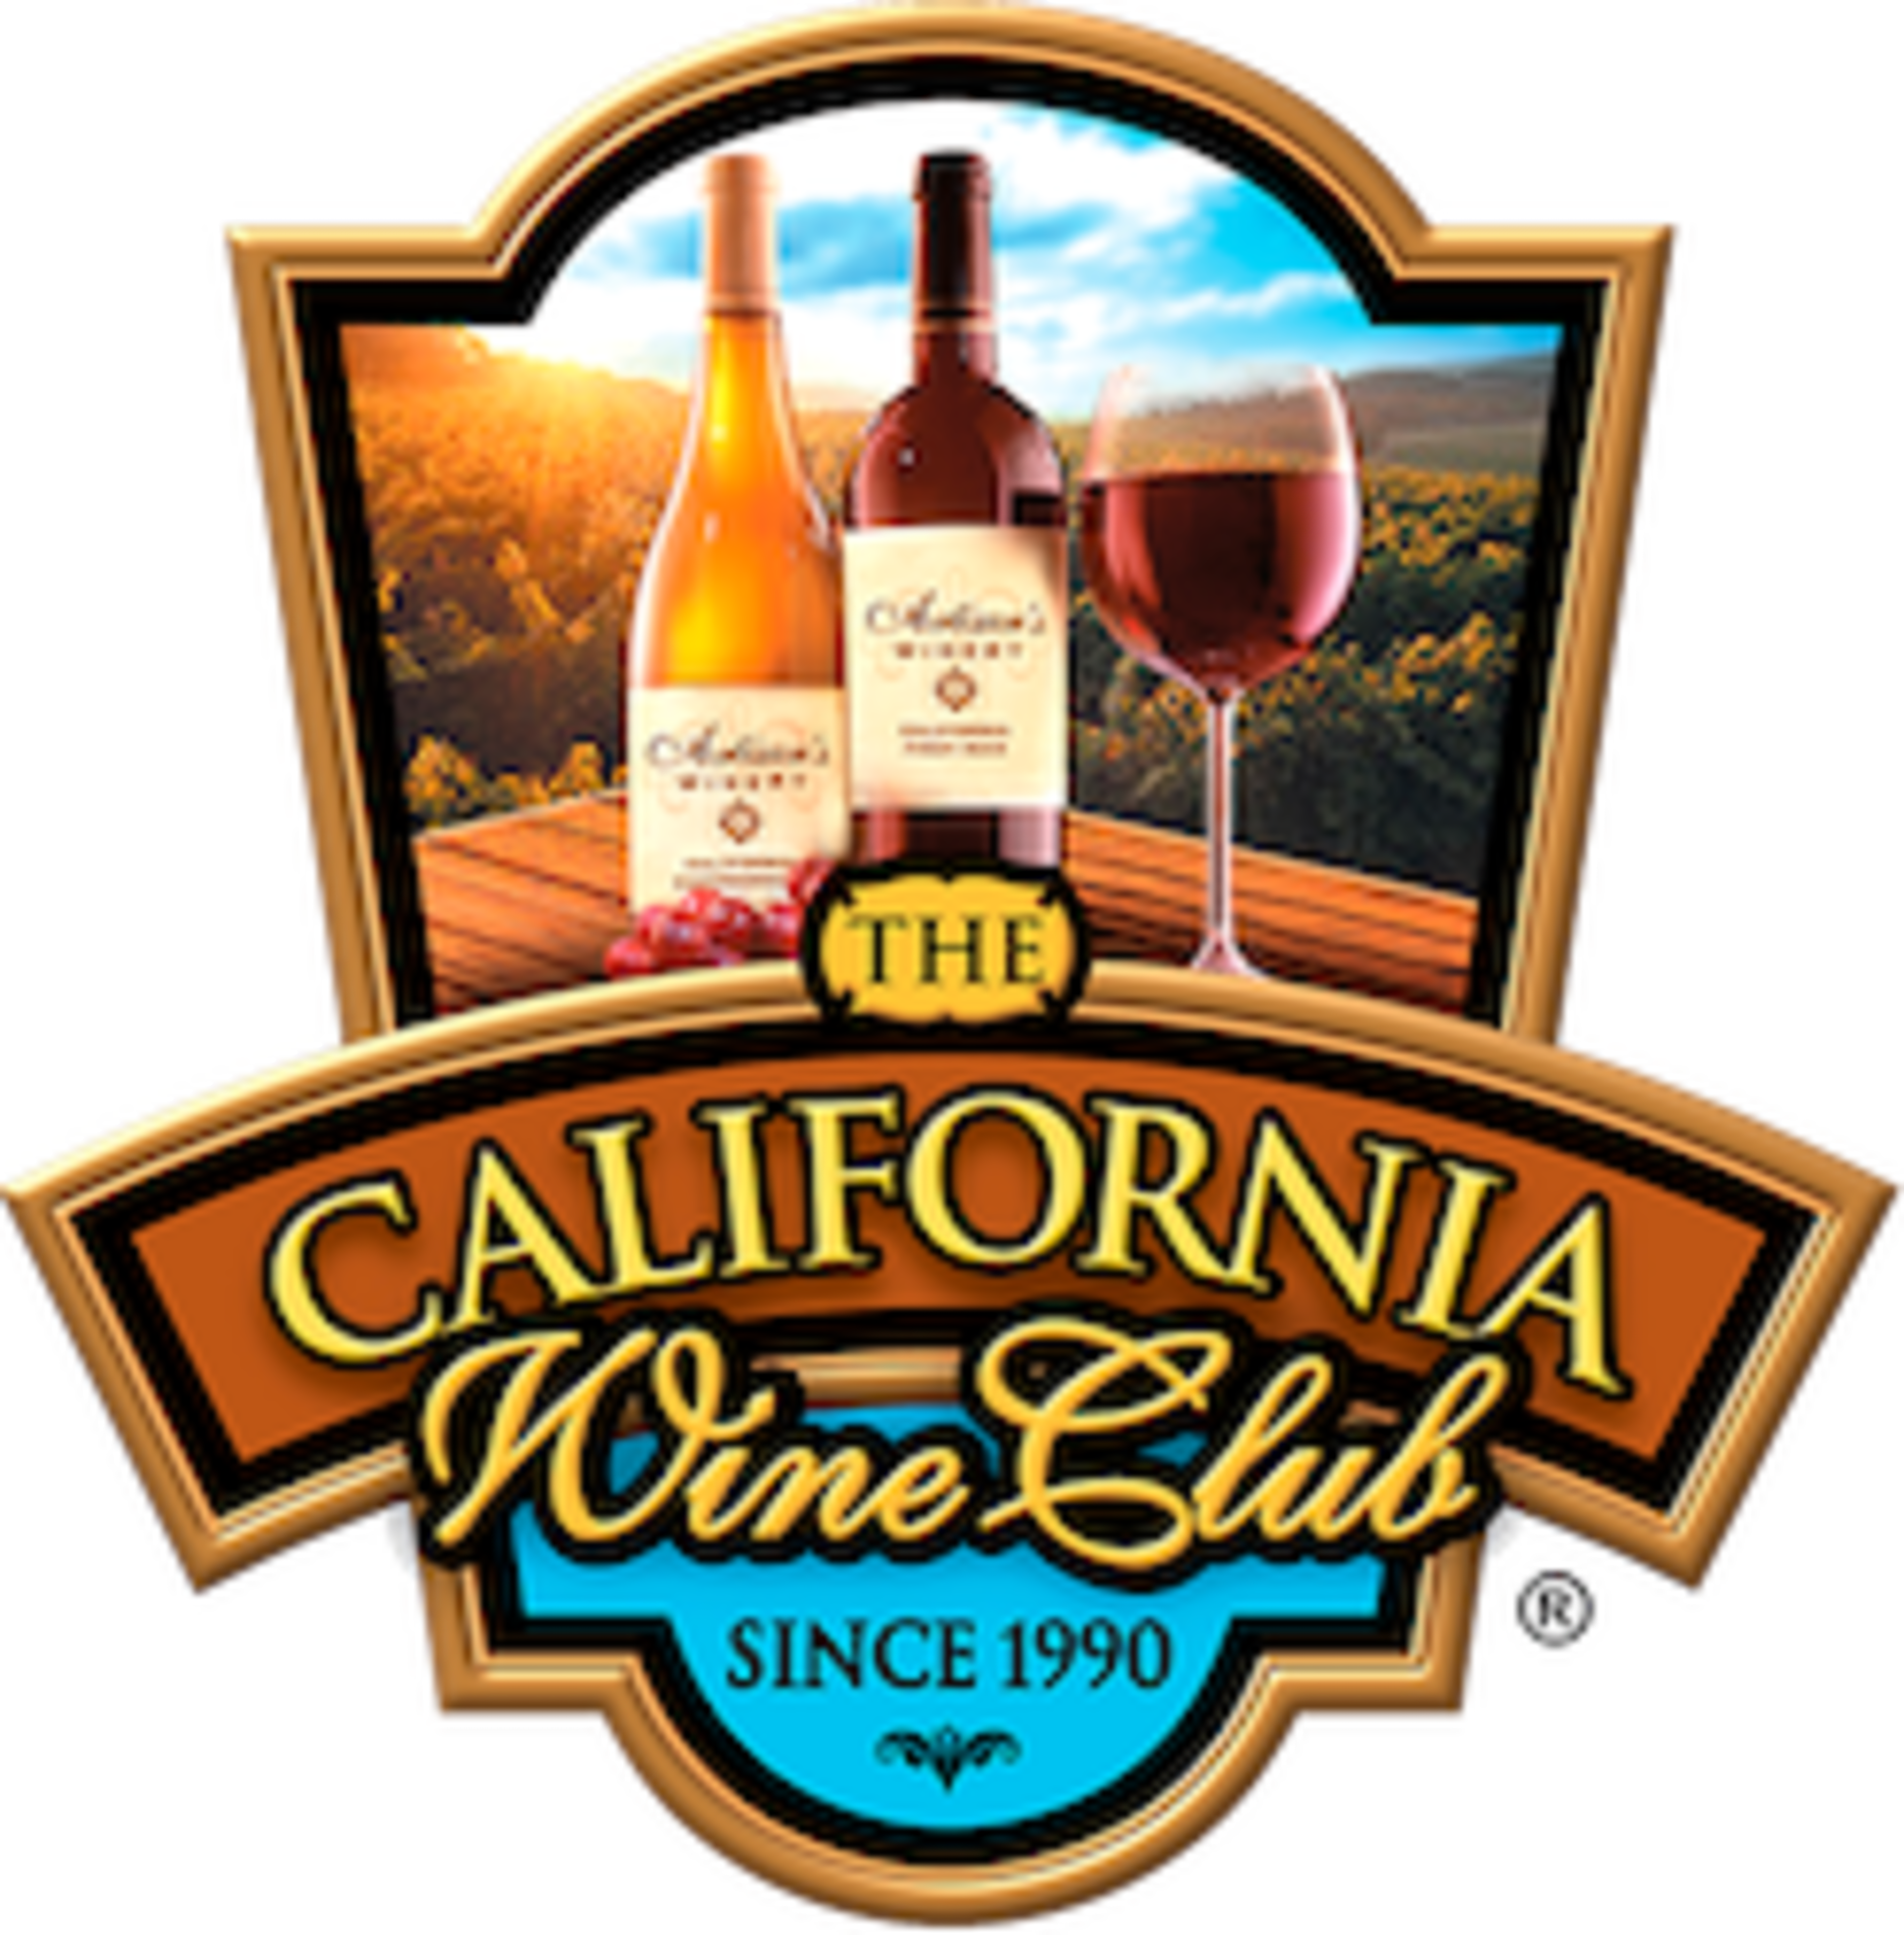 The California Wine Club Code